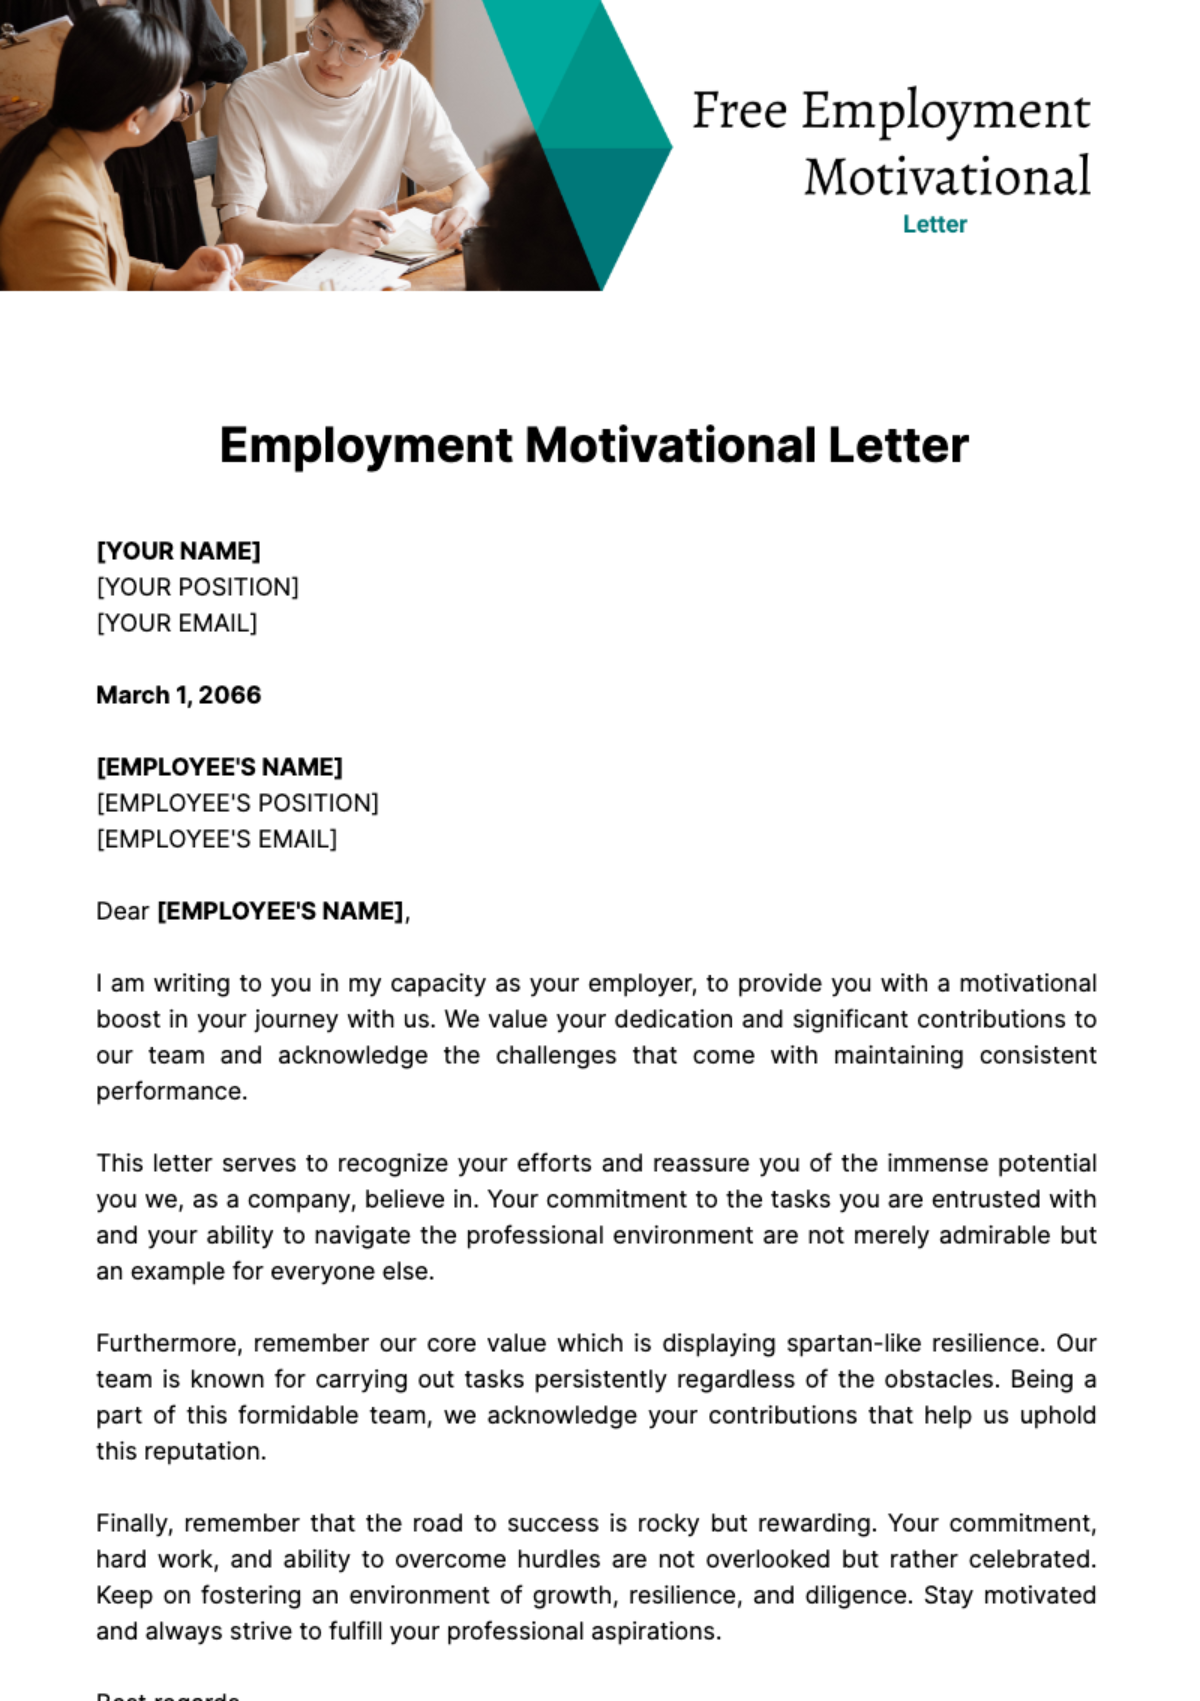 Employment Motivational Letter Template